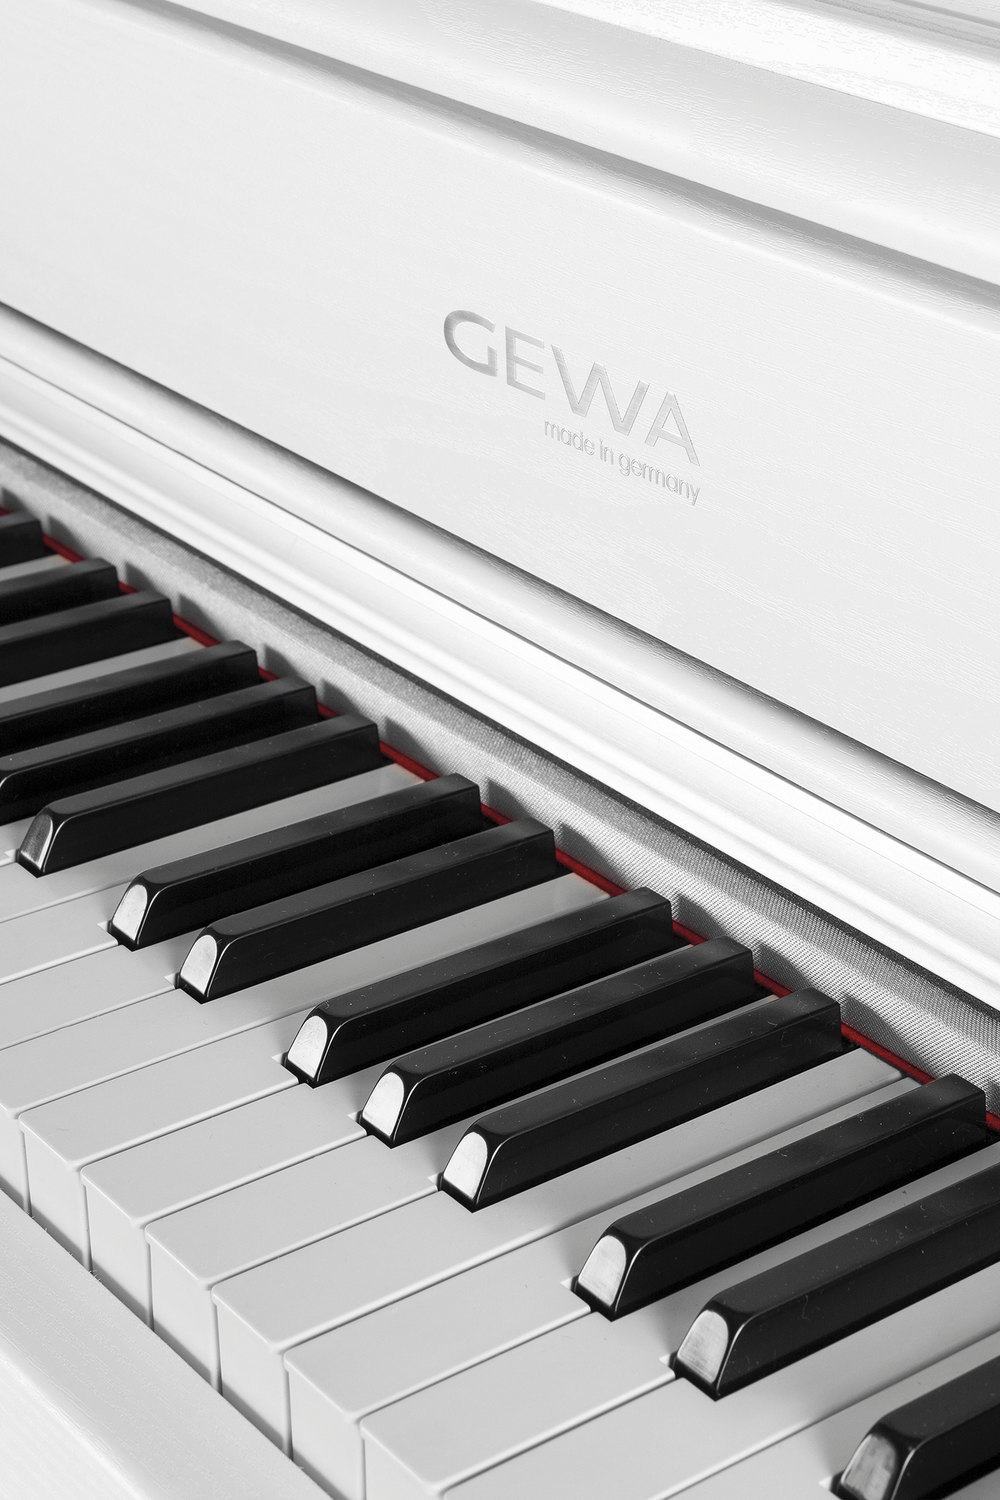 Gewa Up 385 G Blanc - Digital piano with stand - Variation 4